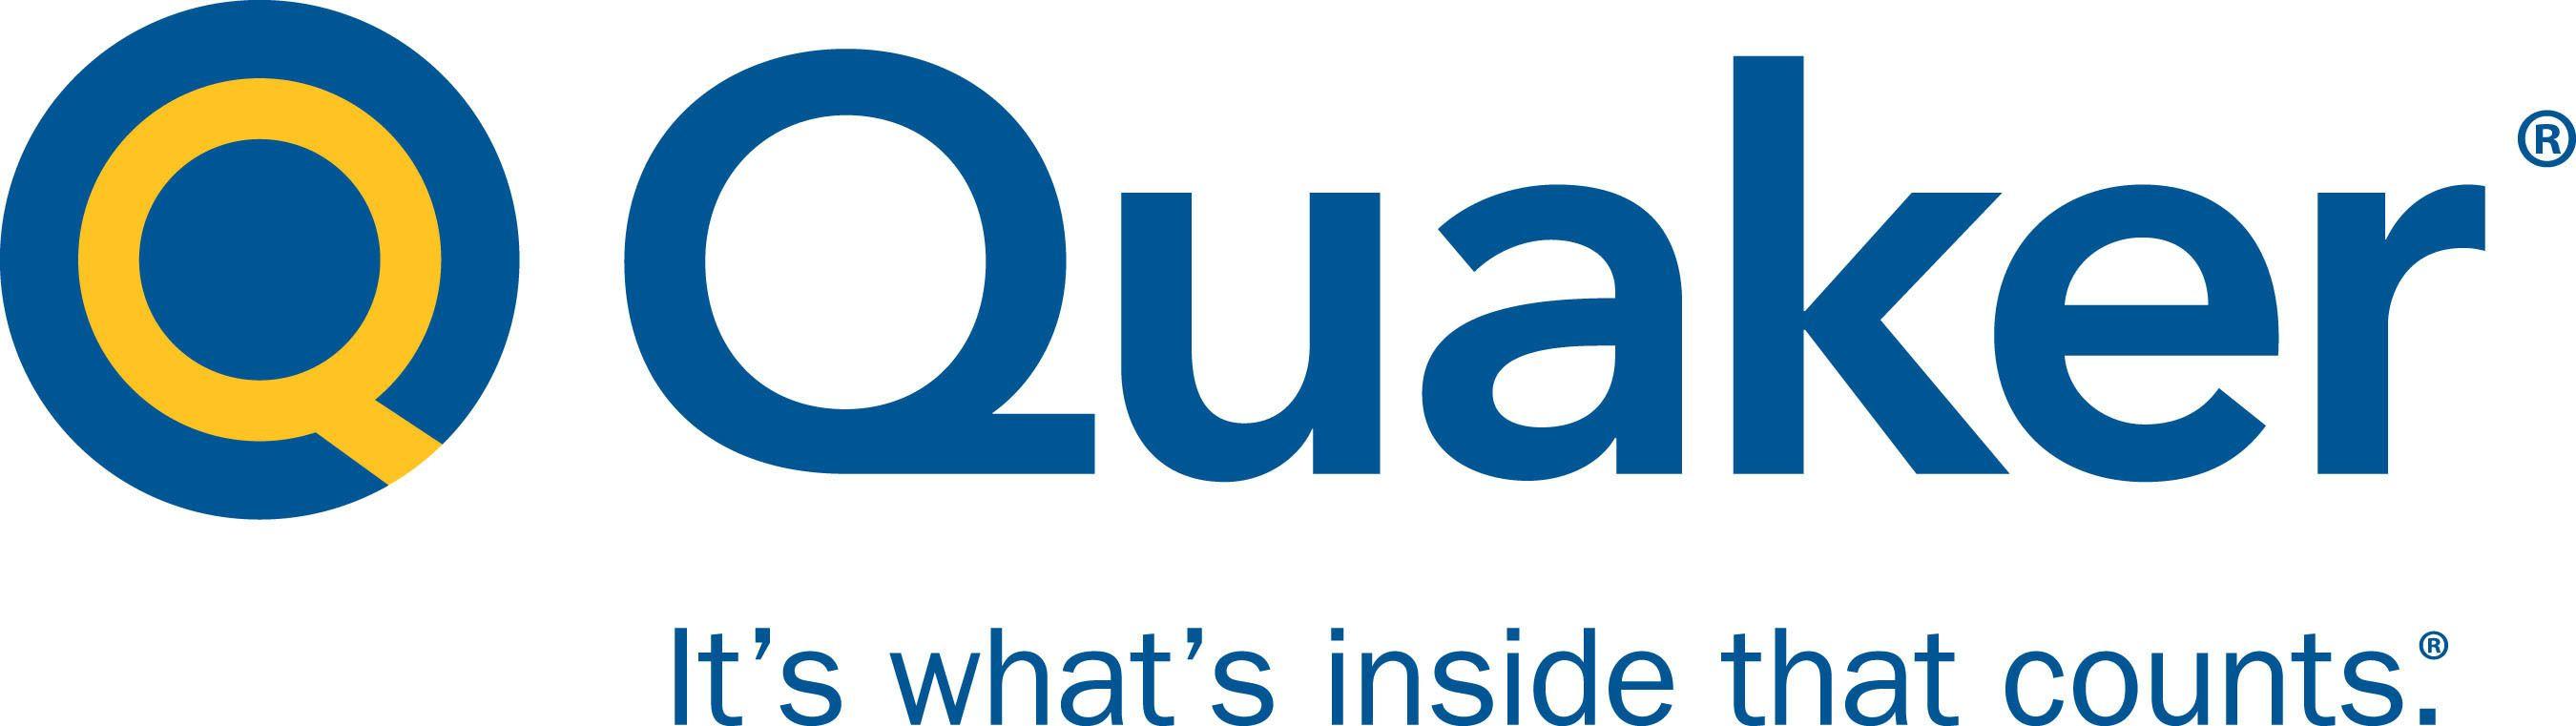 Quacker Logo - Quaker Acquires Lubricor Inc. Canadian Metalworking Fluids Business